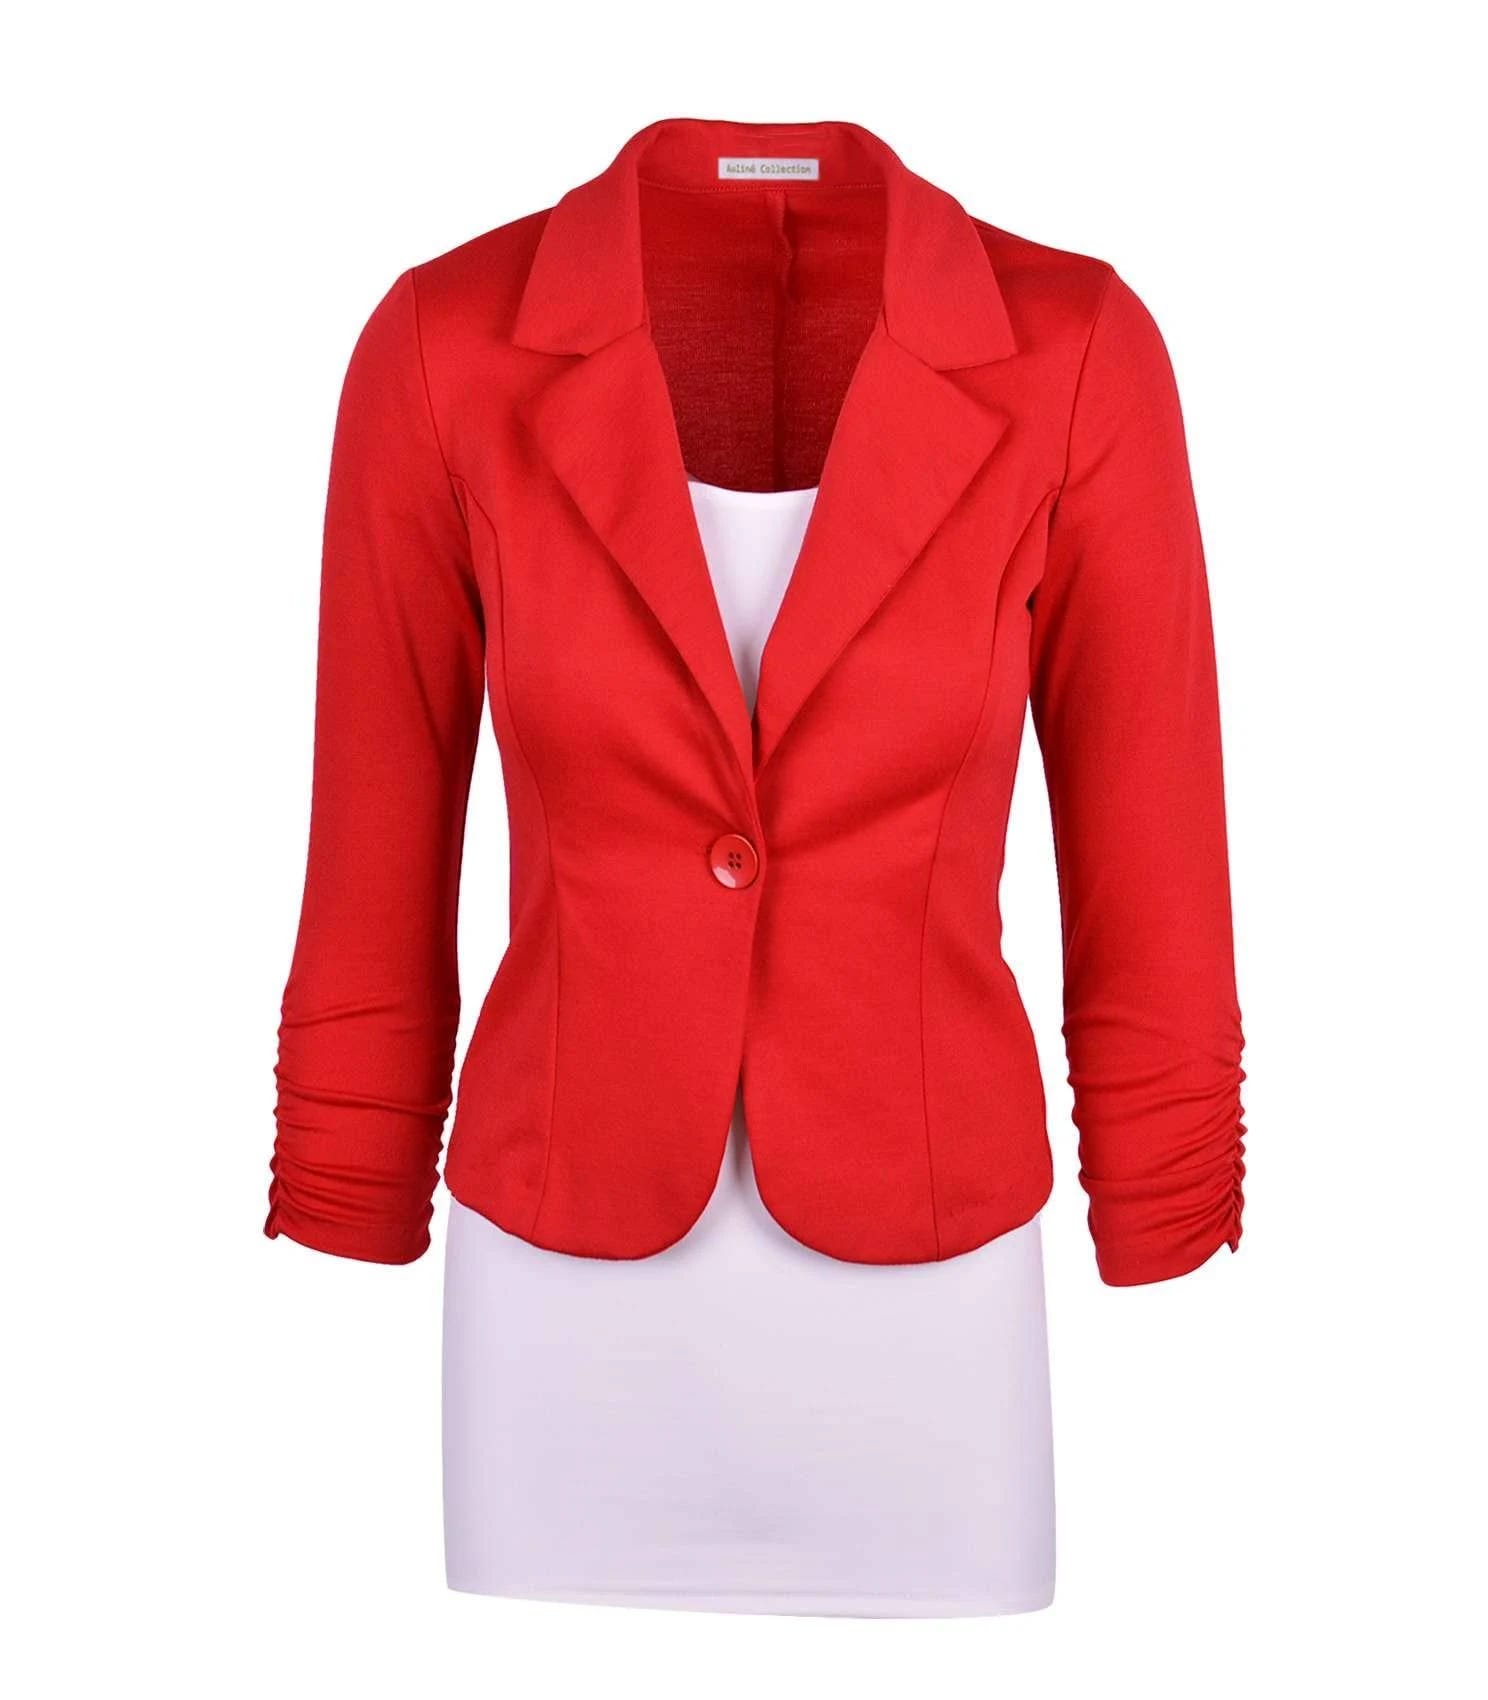 Stylish Red Work Blazer for Women | Image